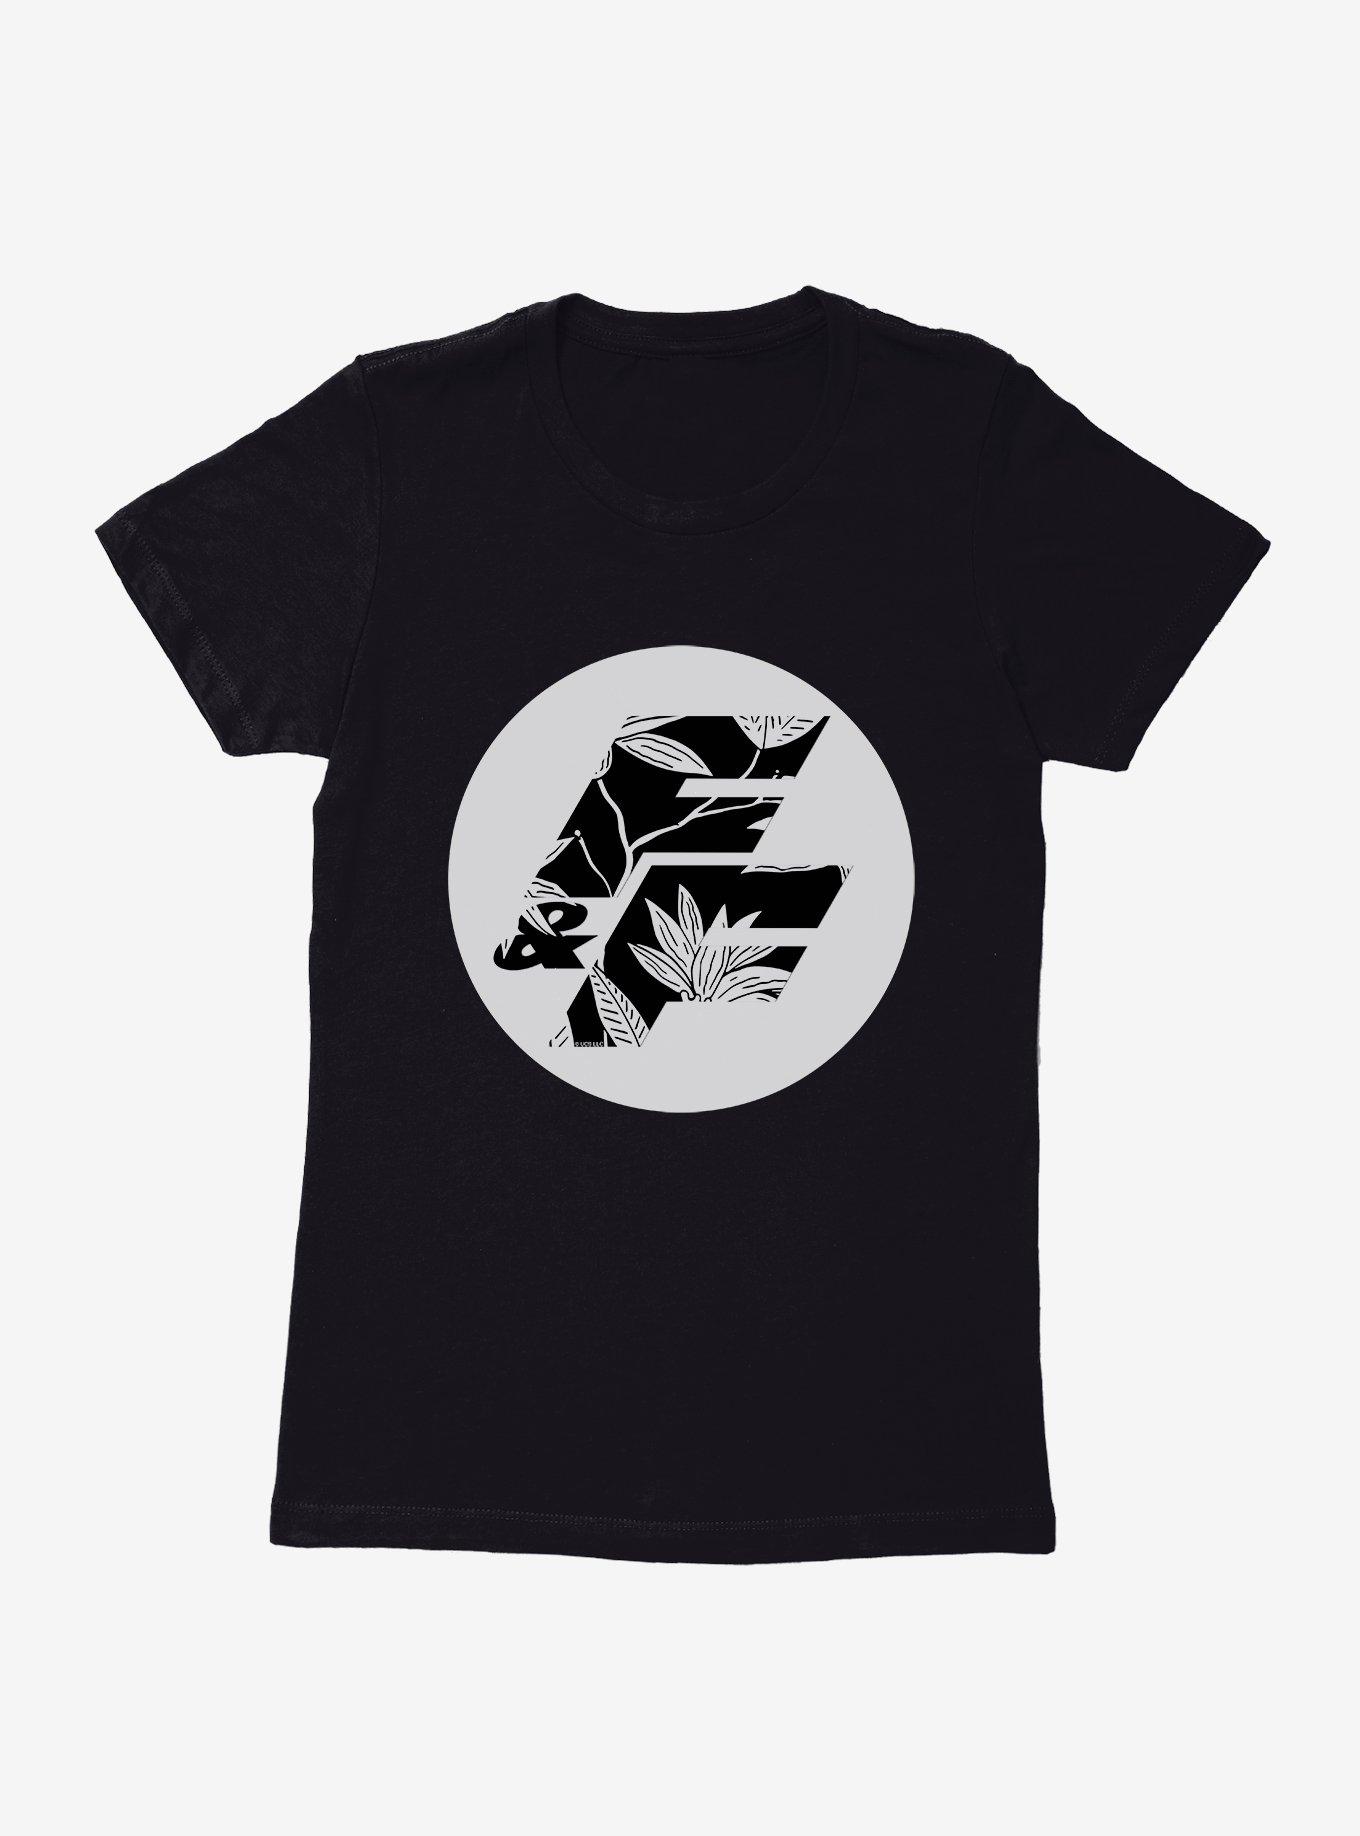 Fast & Furious Grayscale Tropic Logo Womens T-Shirt, BLACK, hi-res